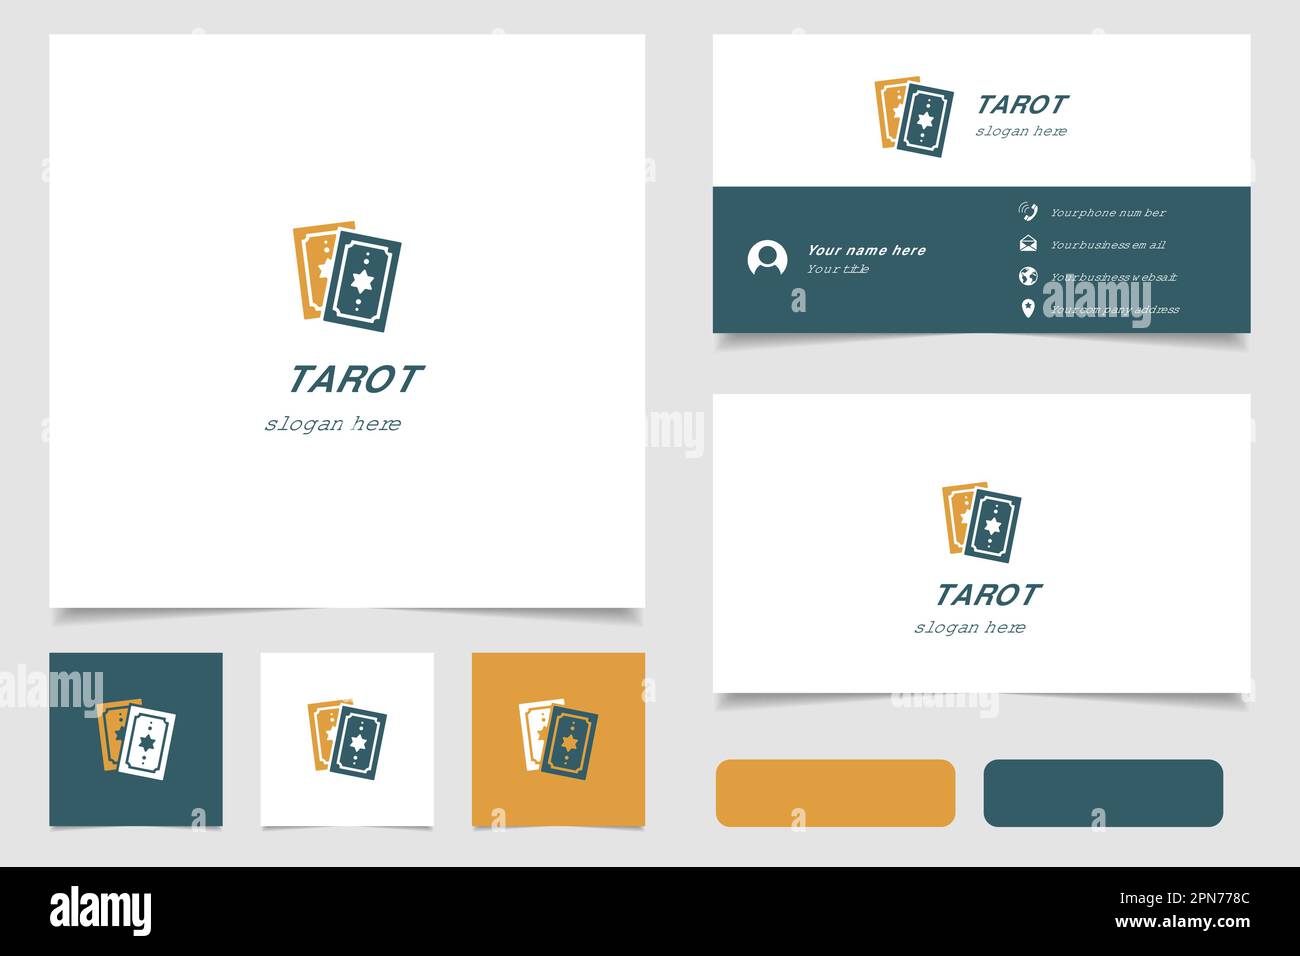 Tarot logo design with editable slogan. Branding book and business card template. Stock Vector